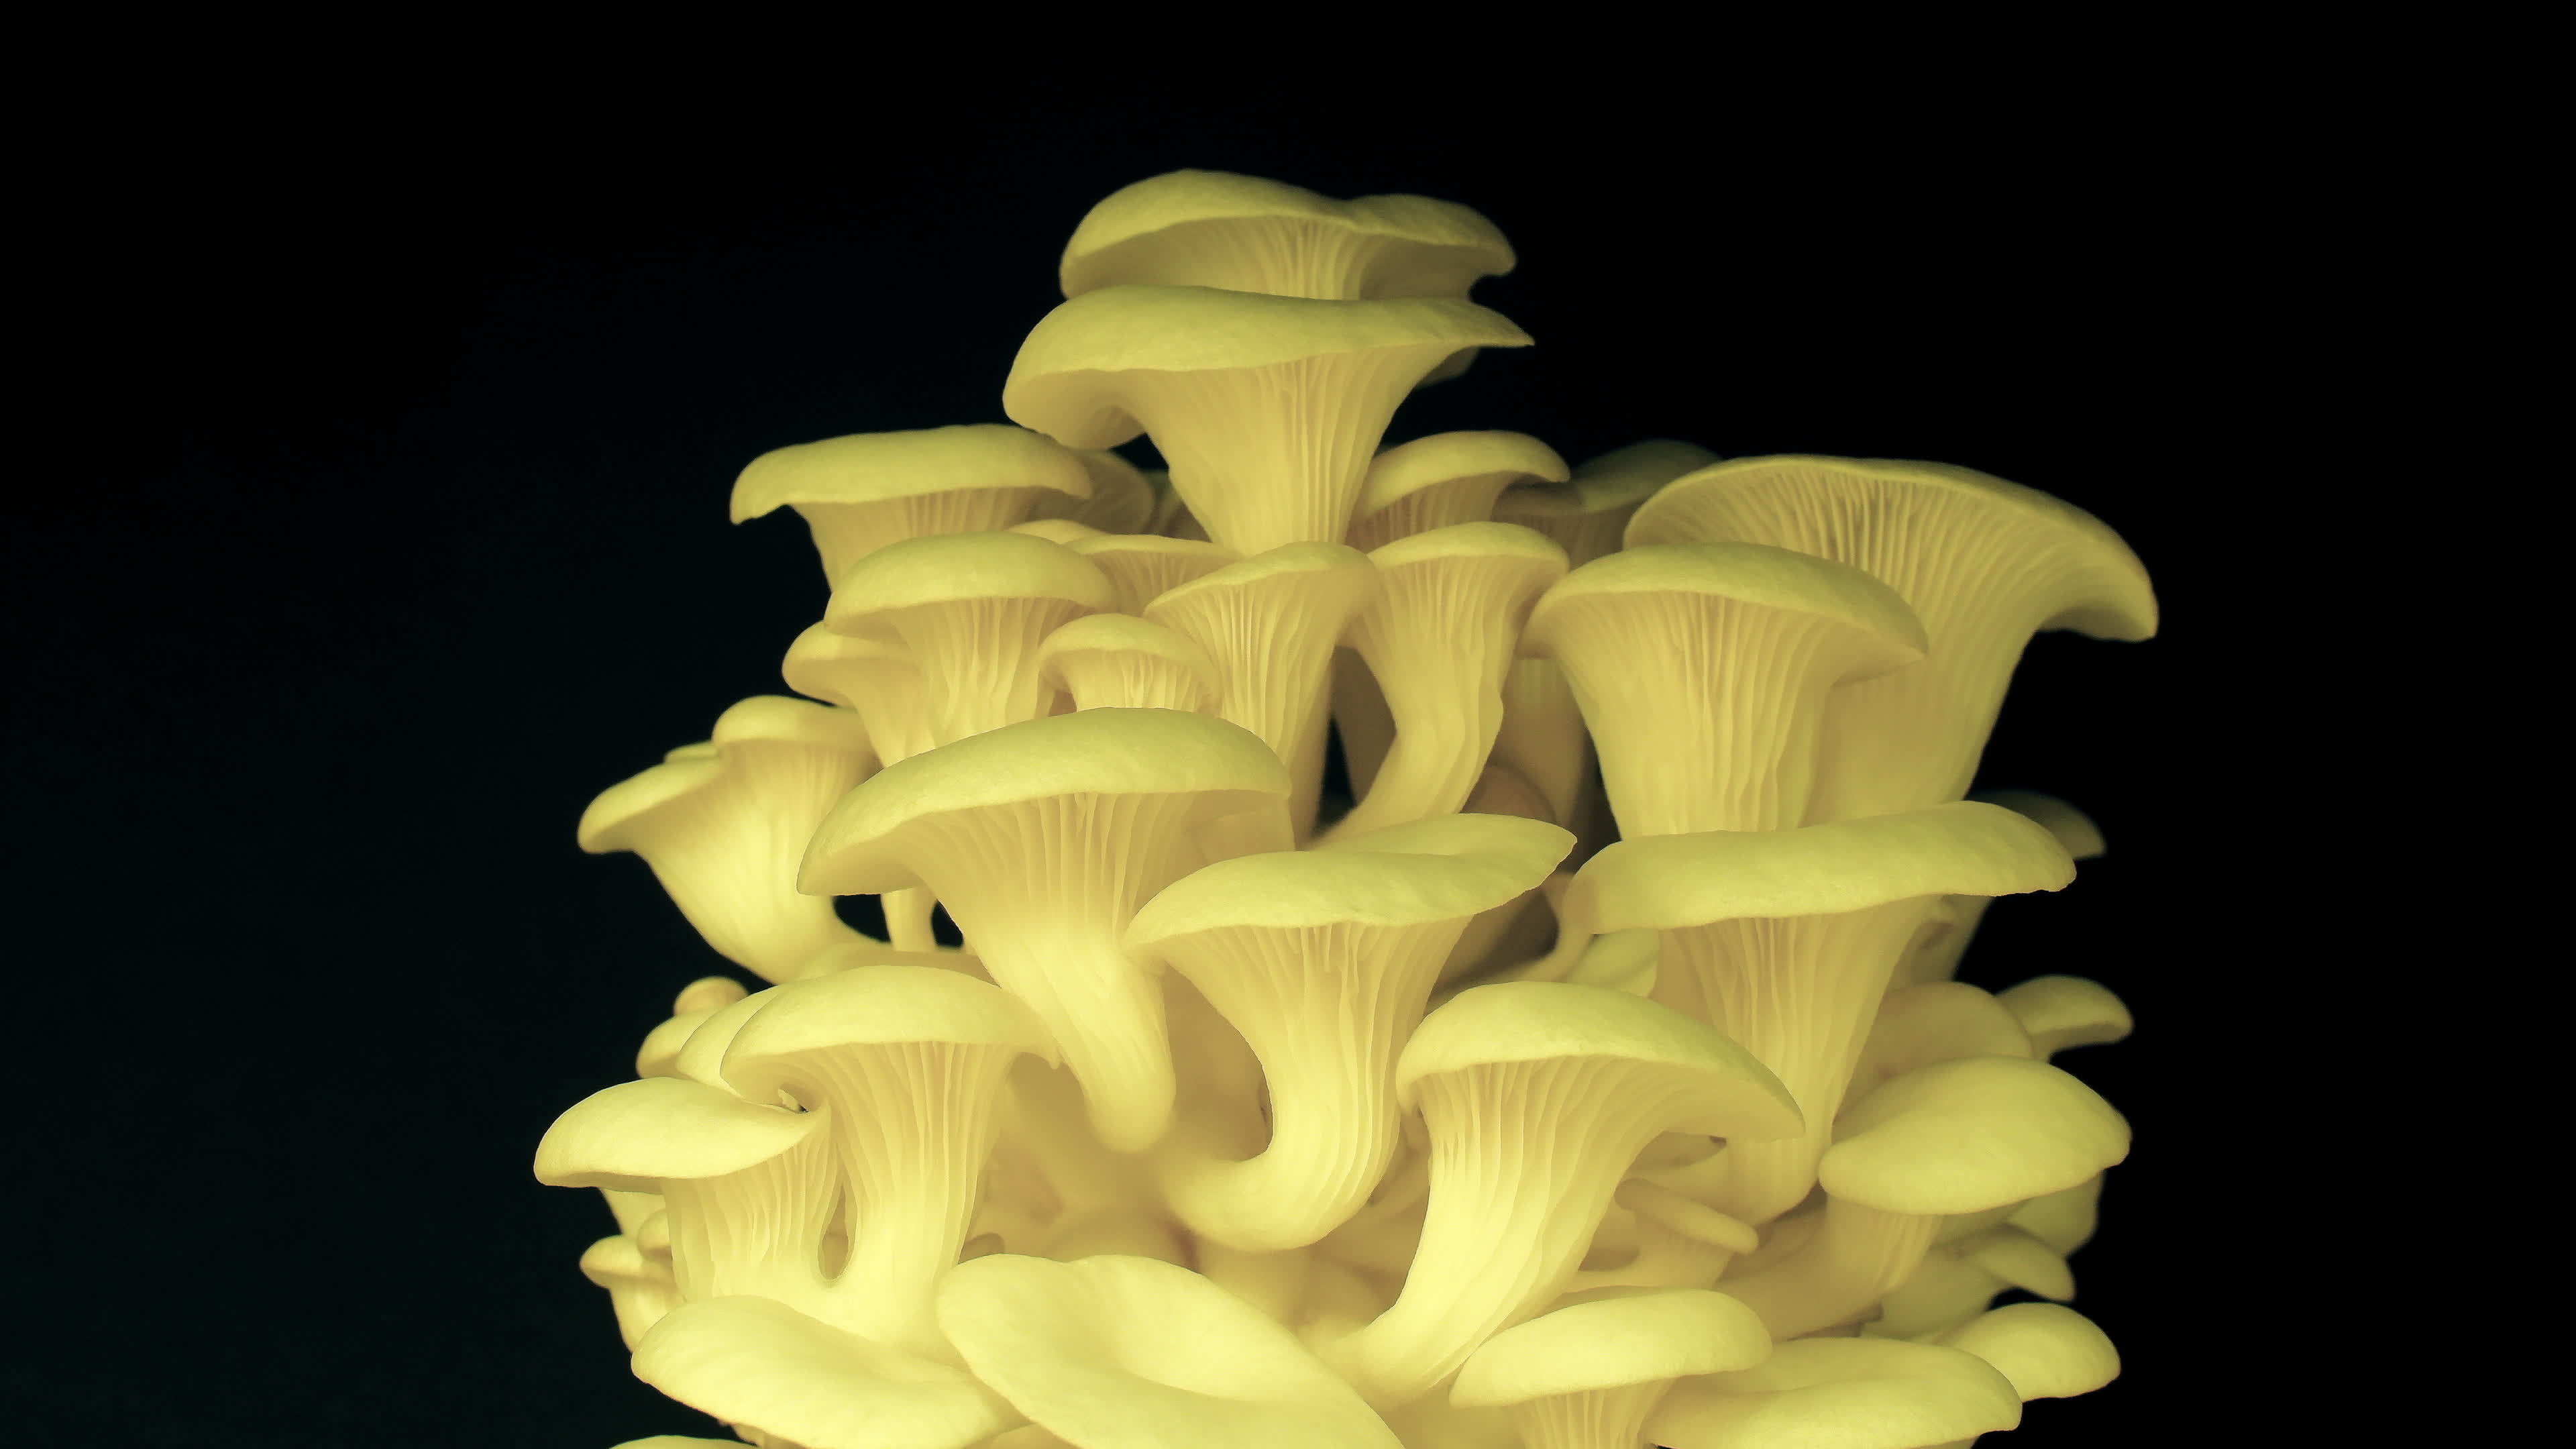 Oyster mushroom growth, Time-lapse wonder, Natural transformation, 4K time-lapse footage, 3840x2160 4K Desktop